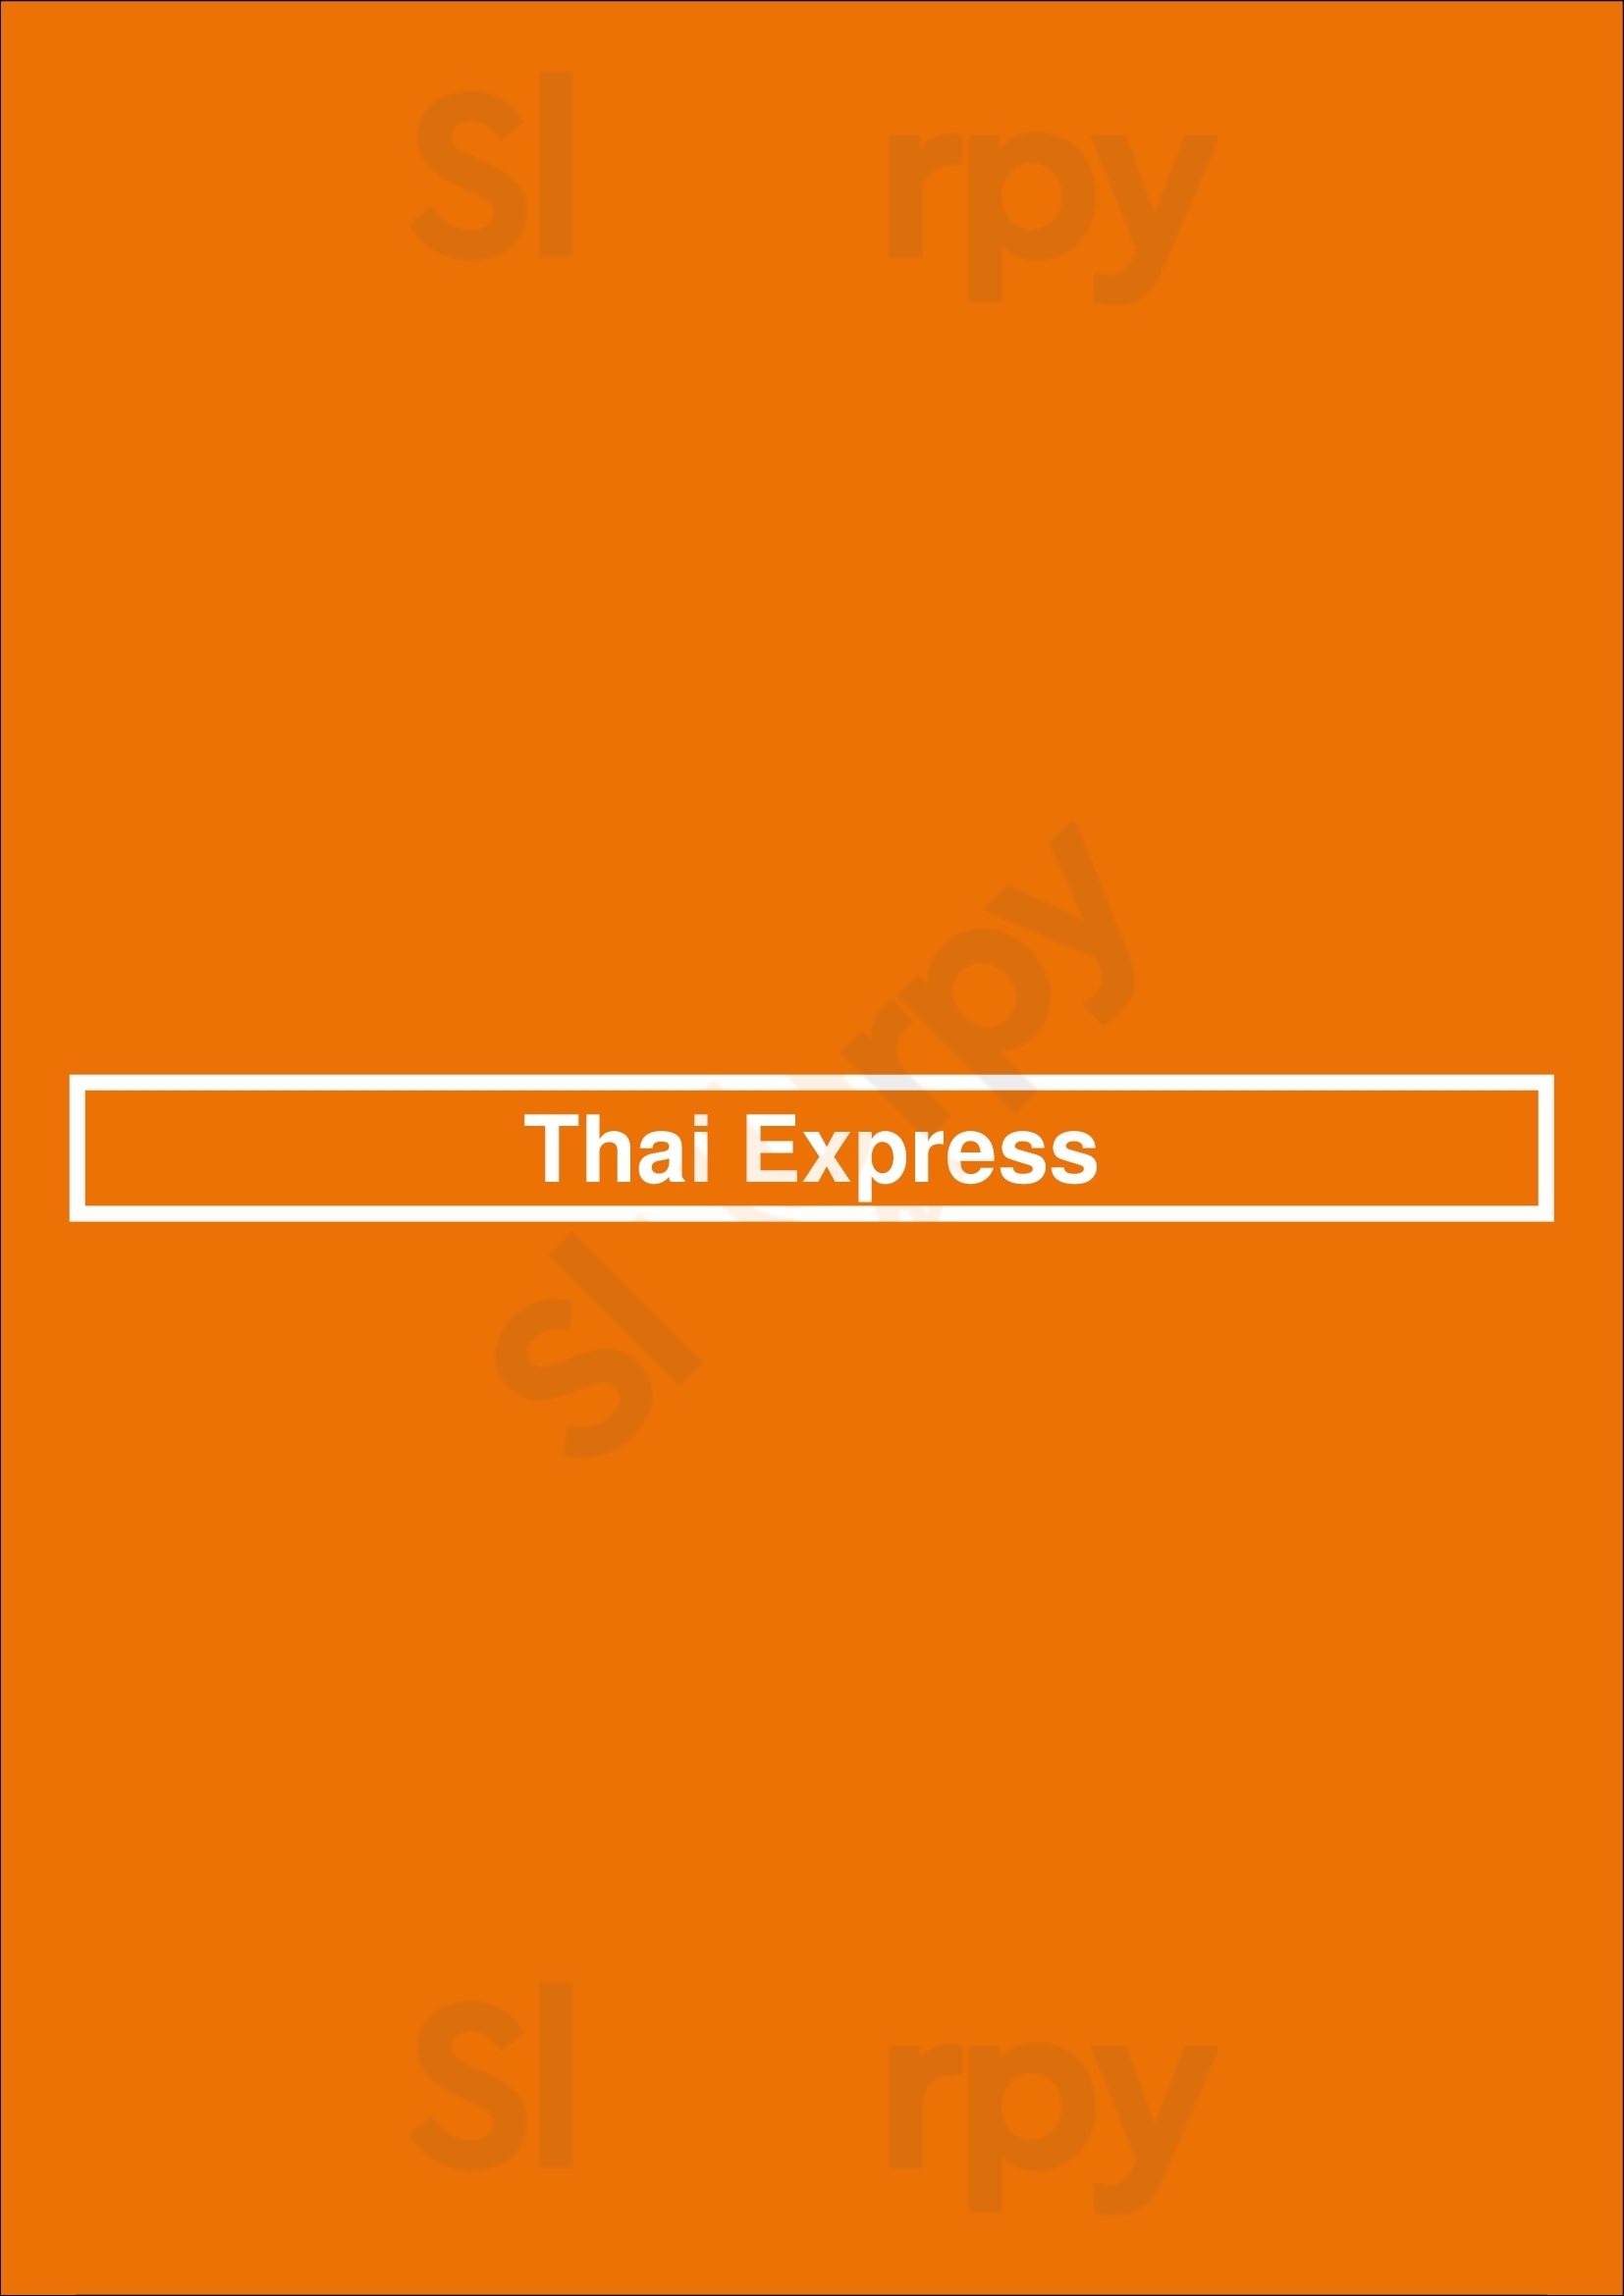 Thai Express Restaurant Montreal Montreal Menu - 1